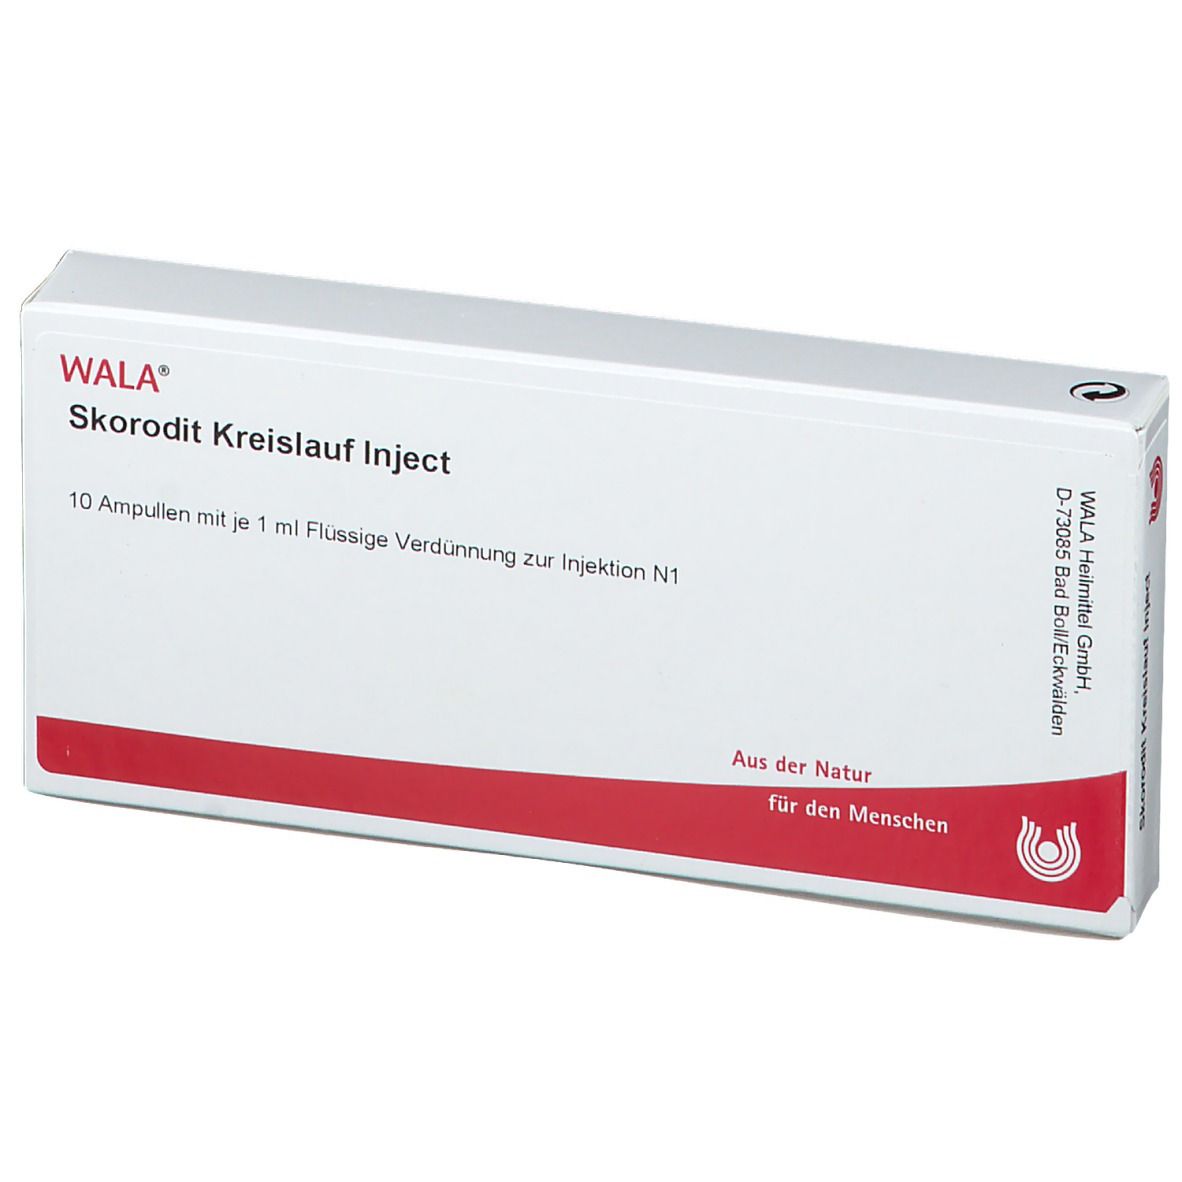 WALA® Skorodit Kreislauf Inject Amp.